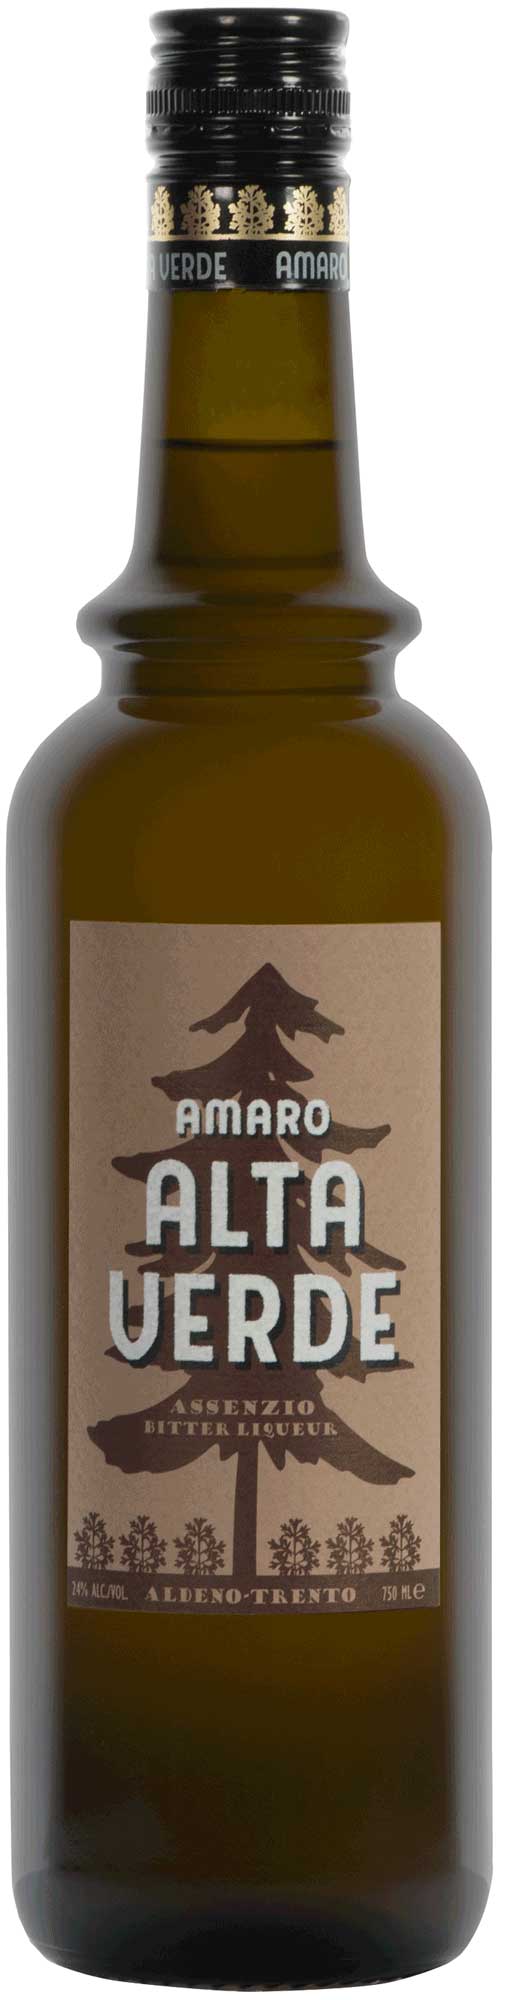 Alta Verde Amaro Assenzio Bitter Liqueur 750ml